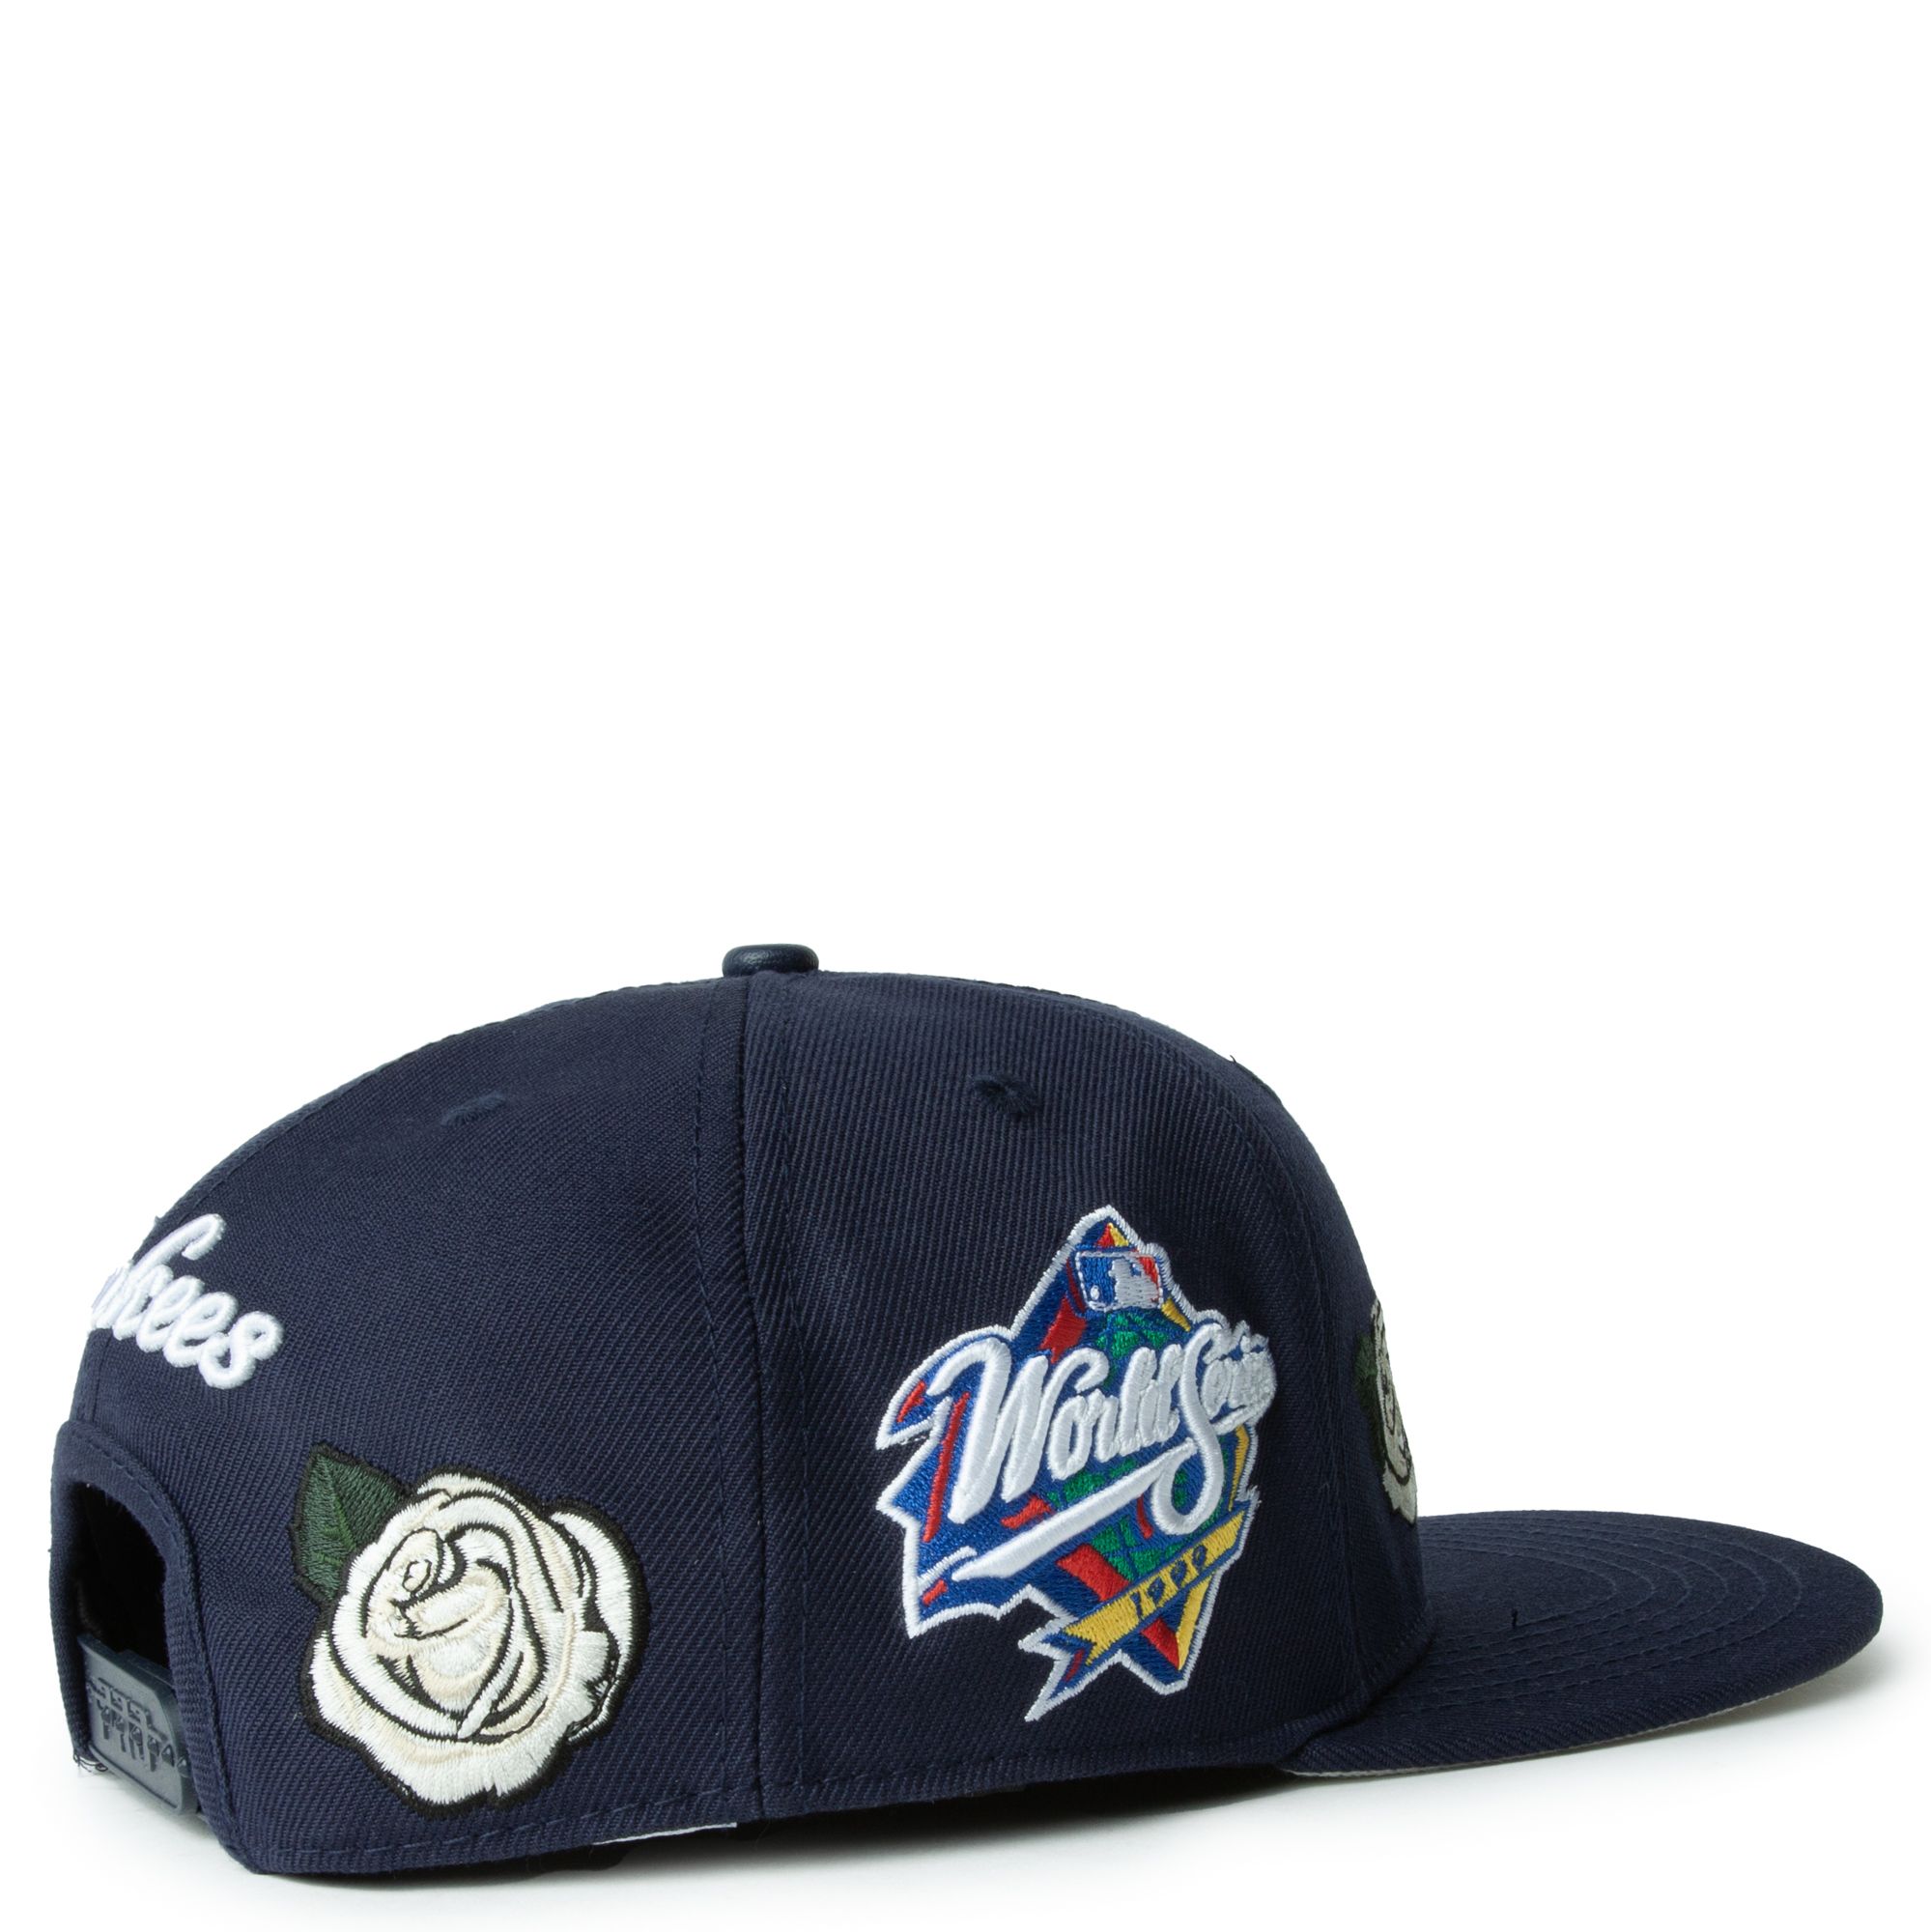 Shop Pro Standard New York Yankees Roses Snapback Hat LNY735366